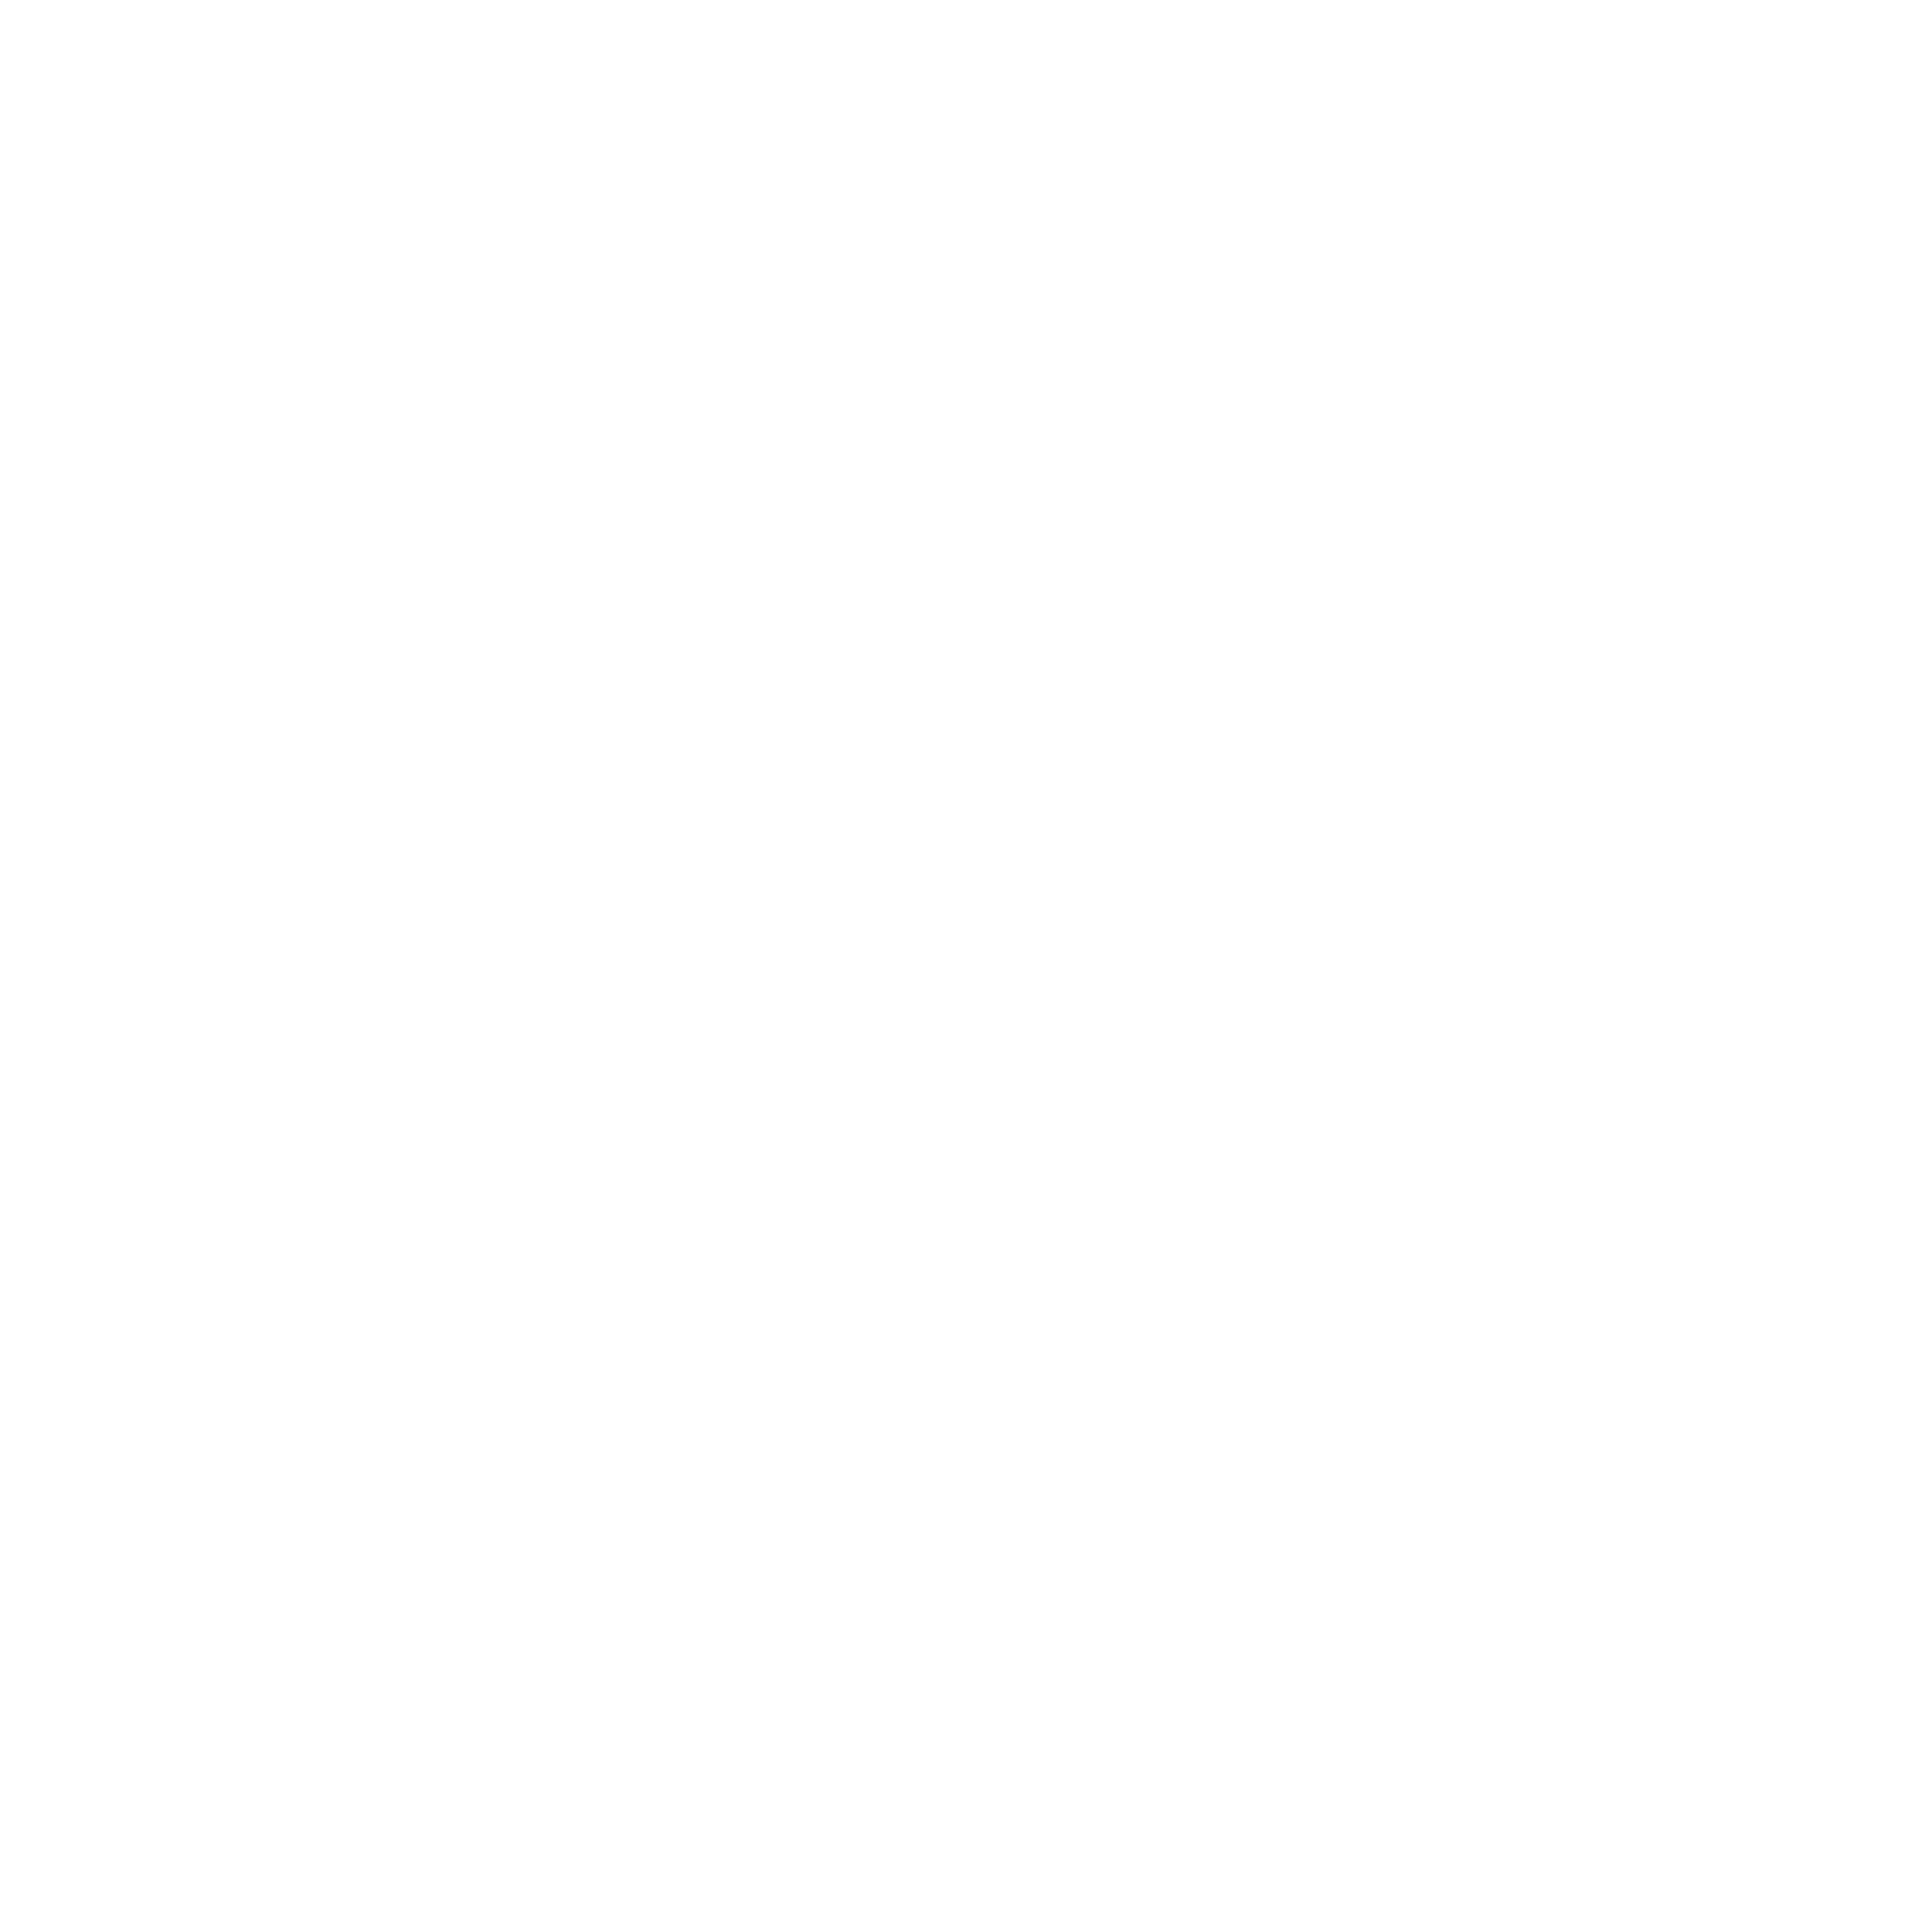 haz service logo_ff-01